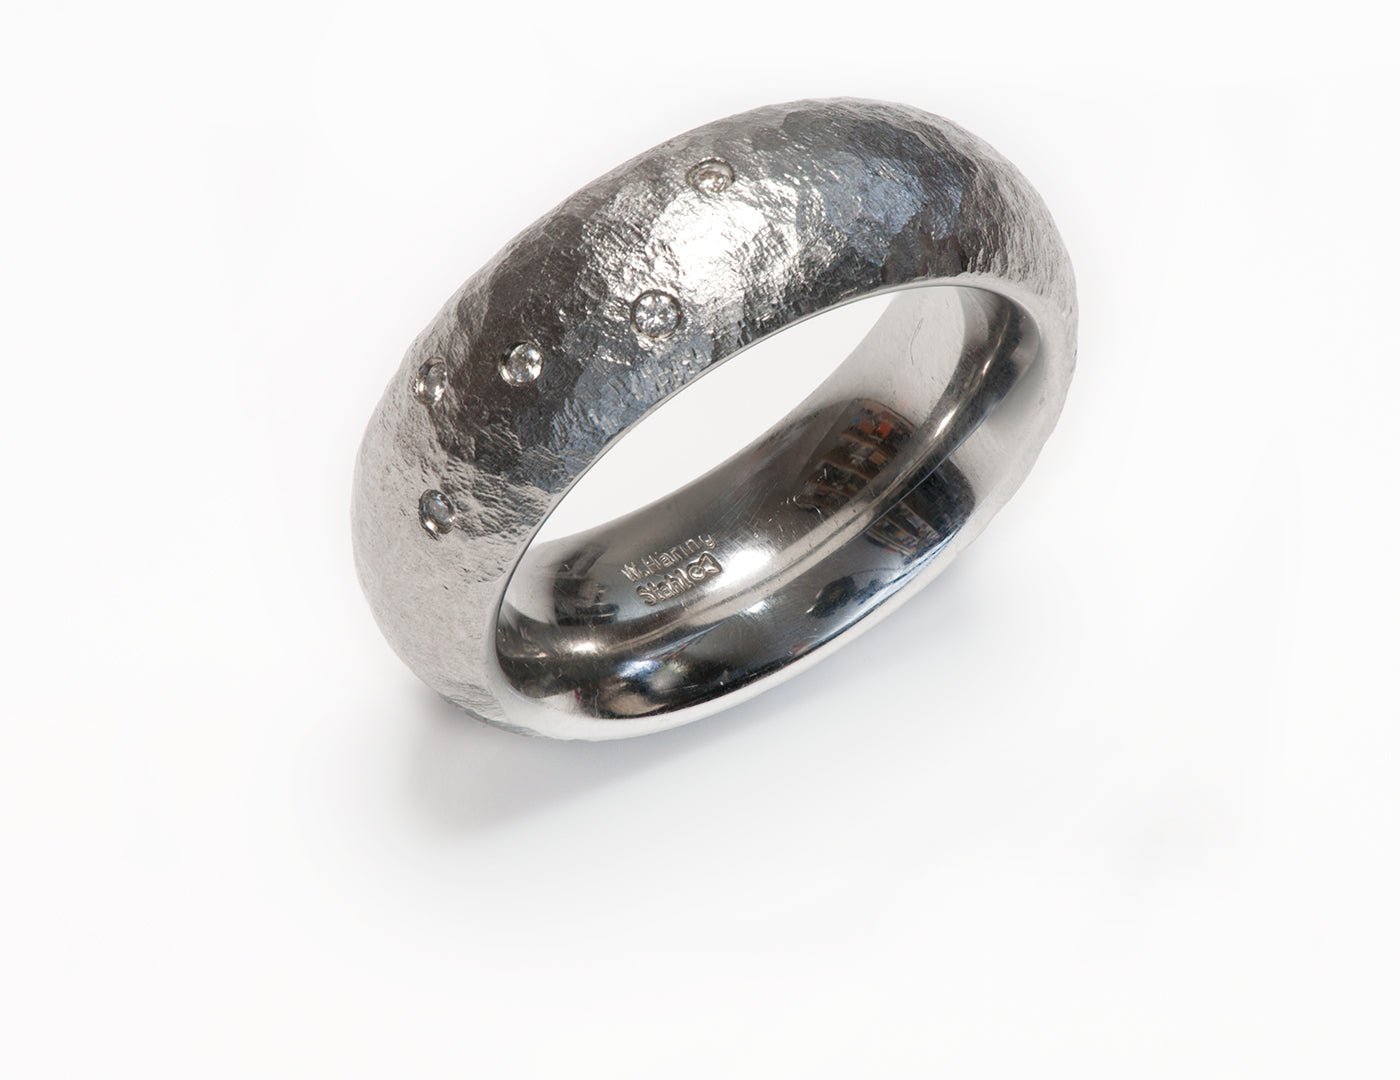 W. Haring Stahl Stainless Steel & Diamond Men's Band Ring